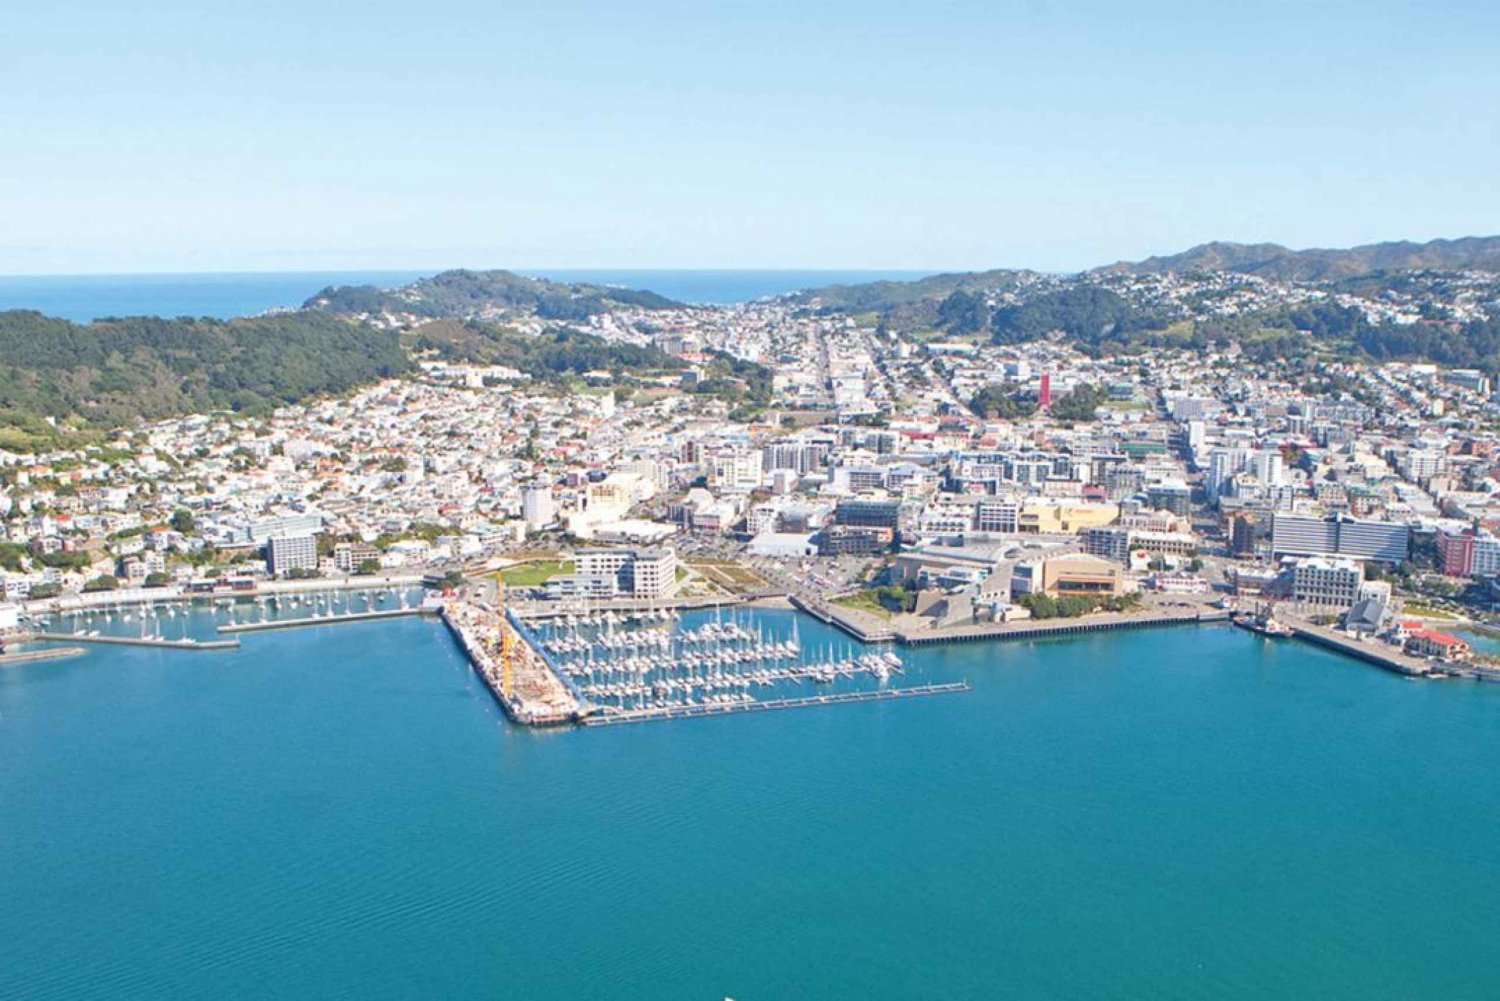 Best Scenic Tours In Wellington